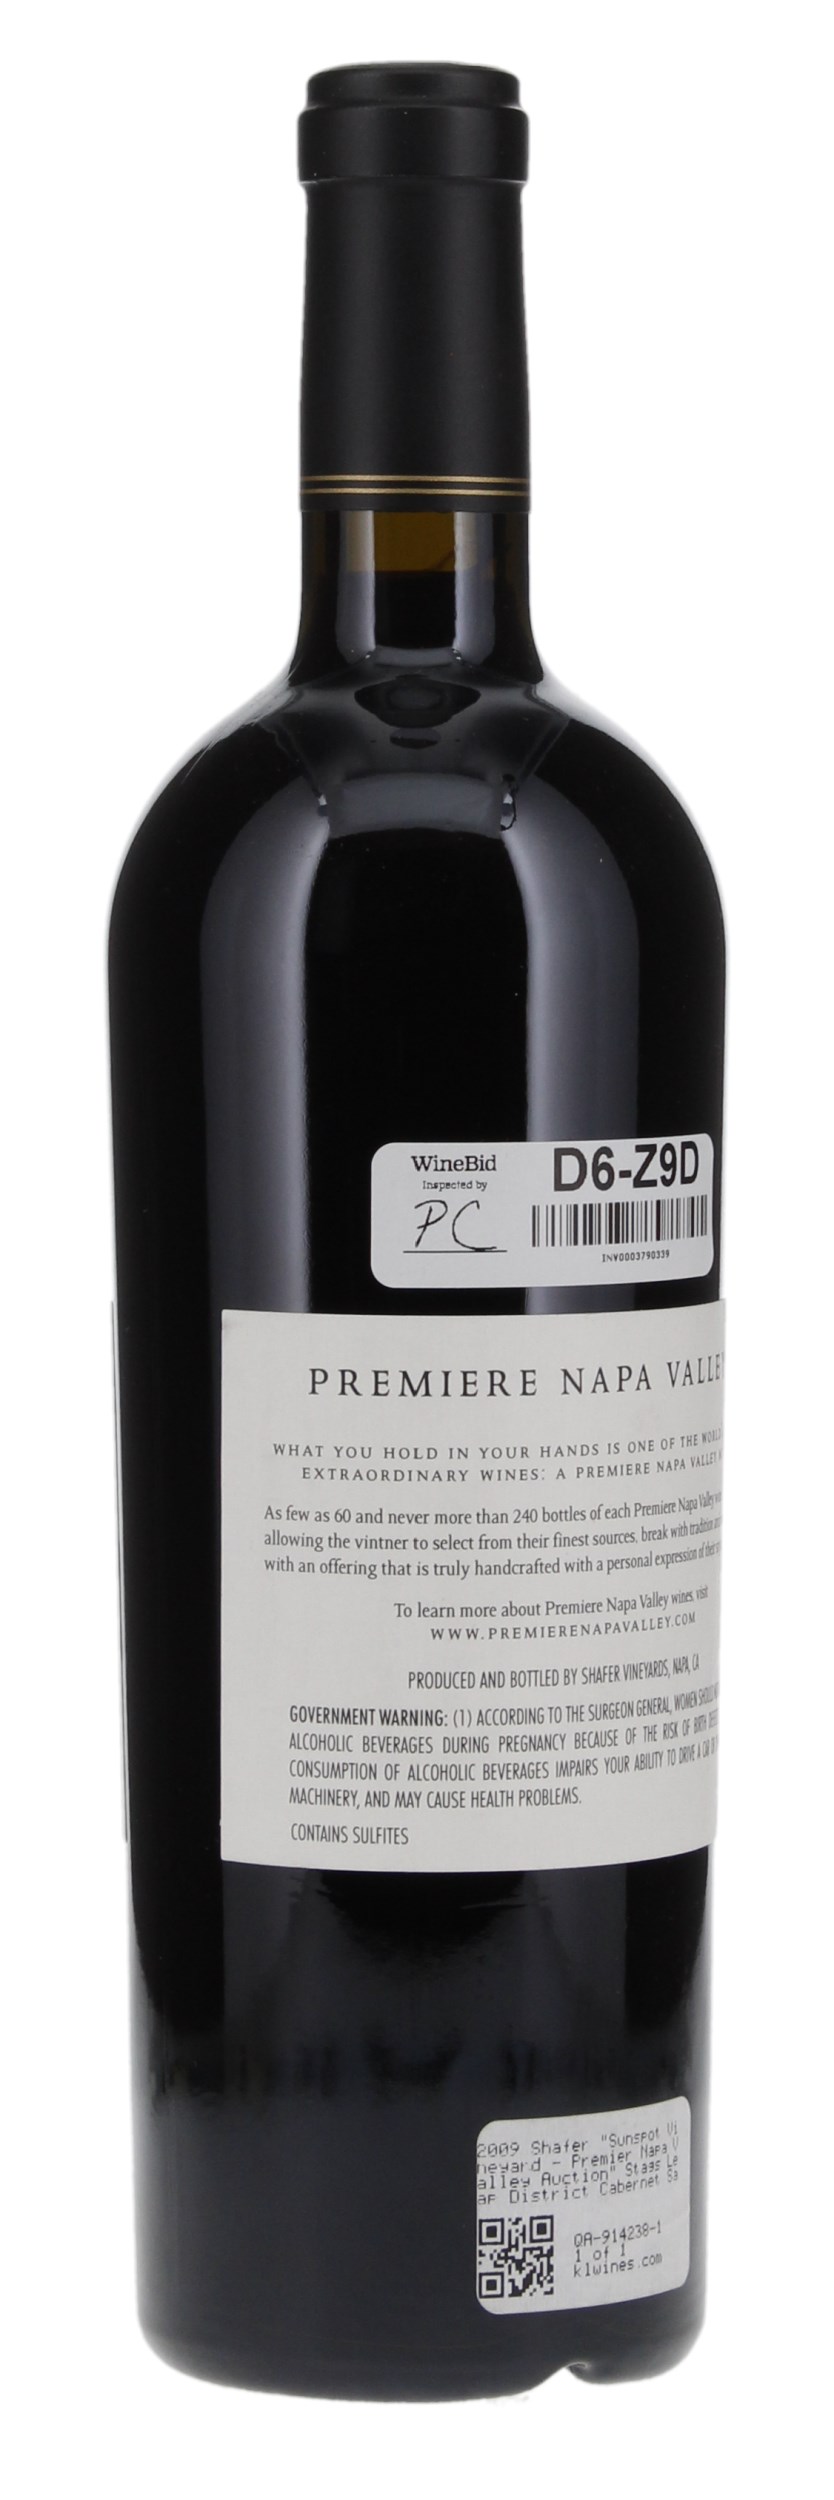 2009 Premiere Napa Valley Auction Shafer Vineyards Sunspot Vnyd Cabernet Sauvignon, 750ml